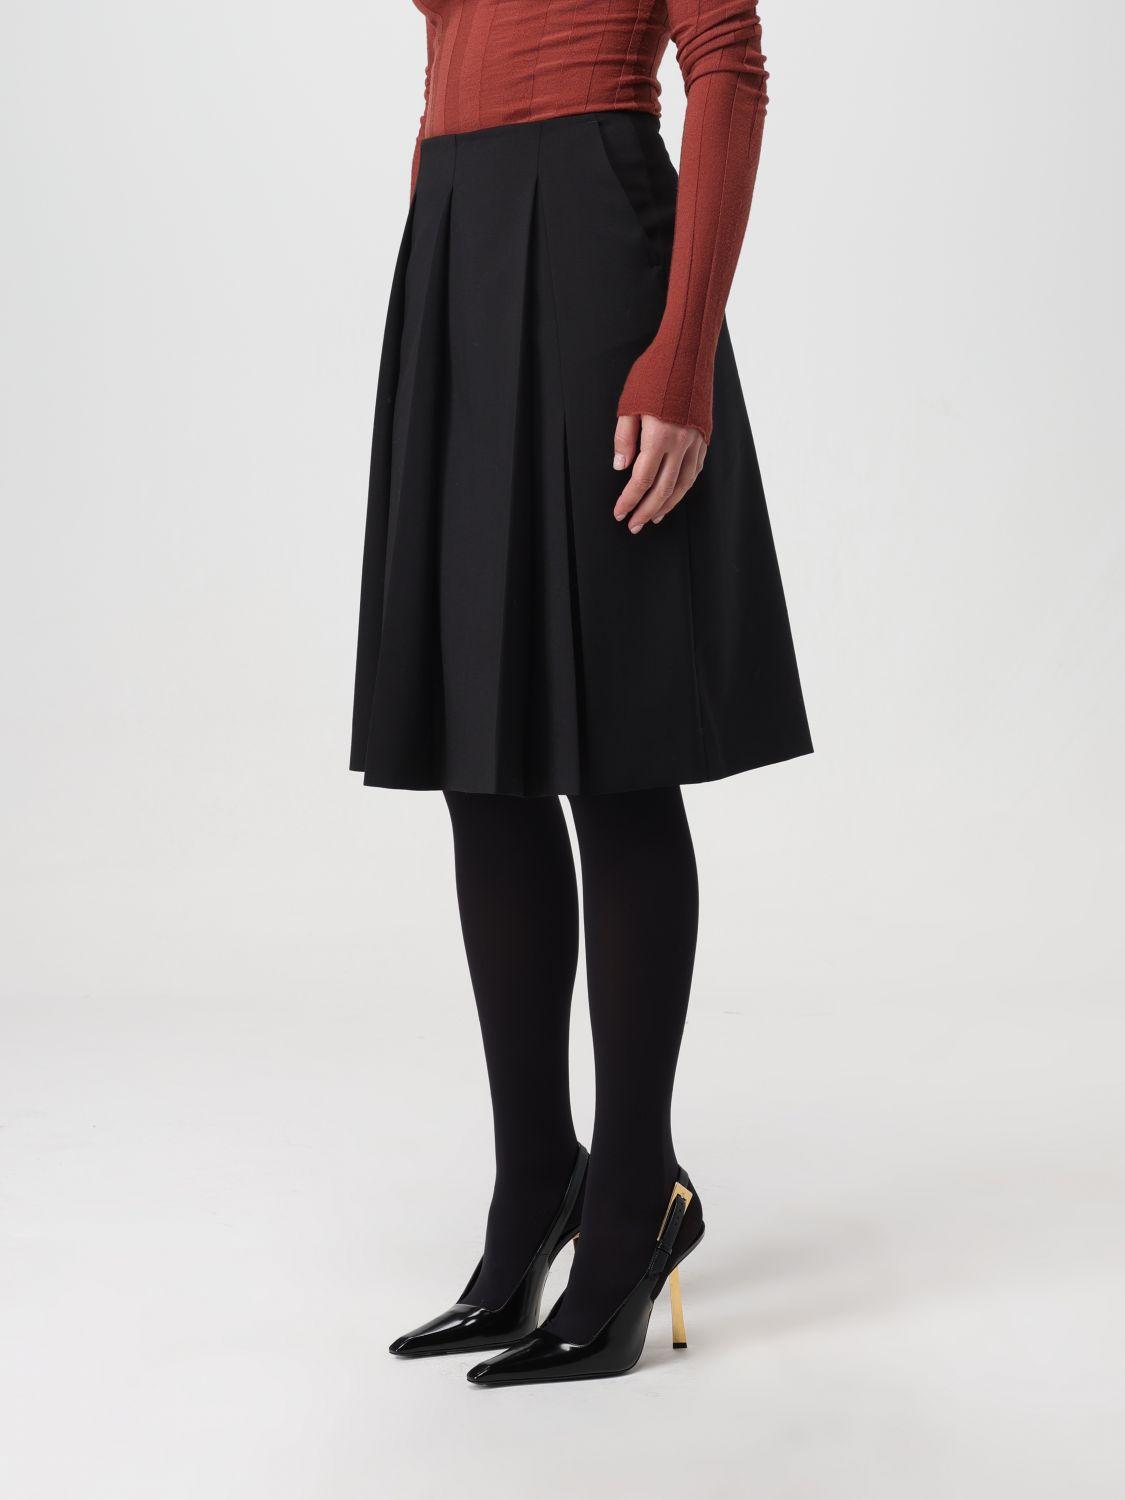 Sportmax Skirt in Black | Lyst Canada